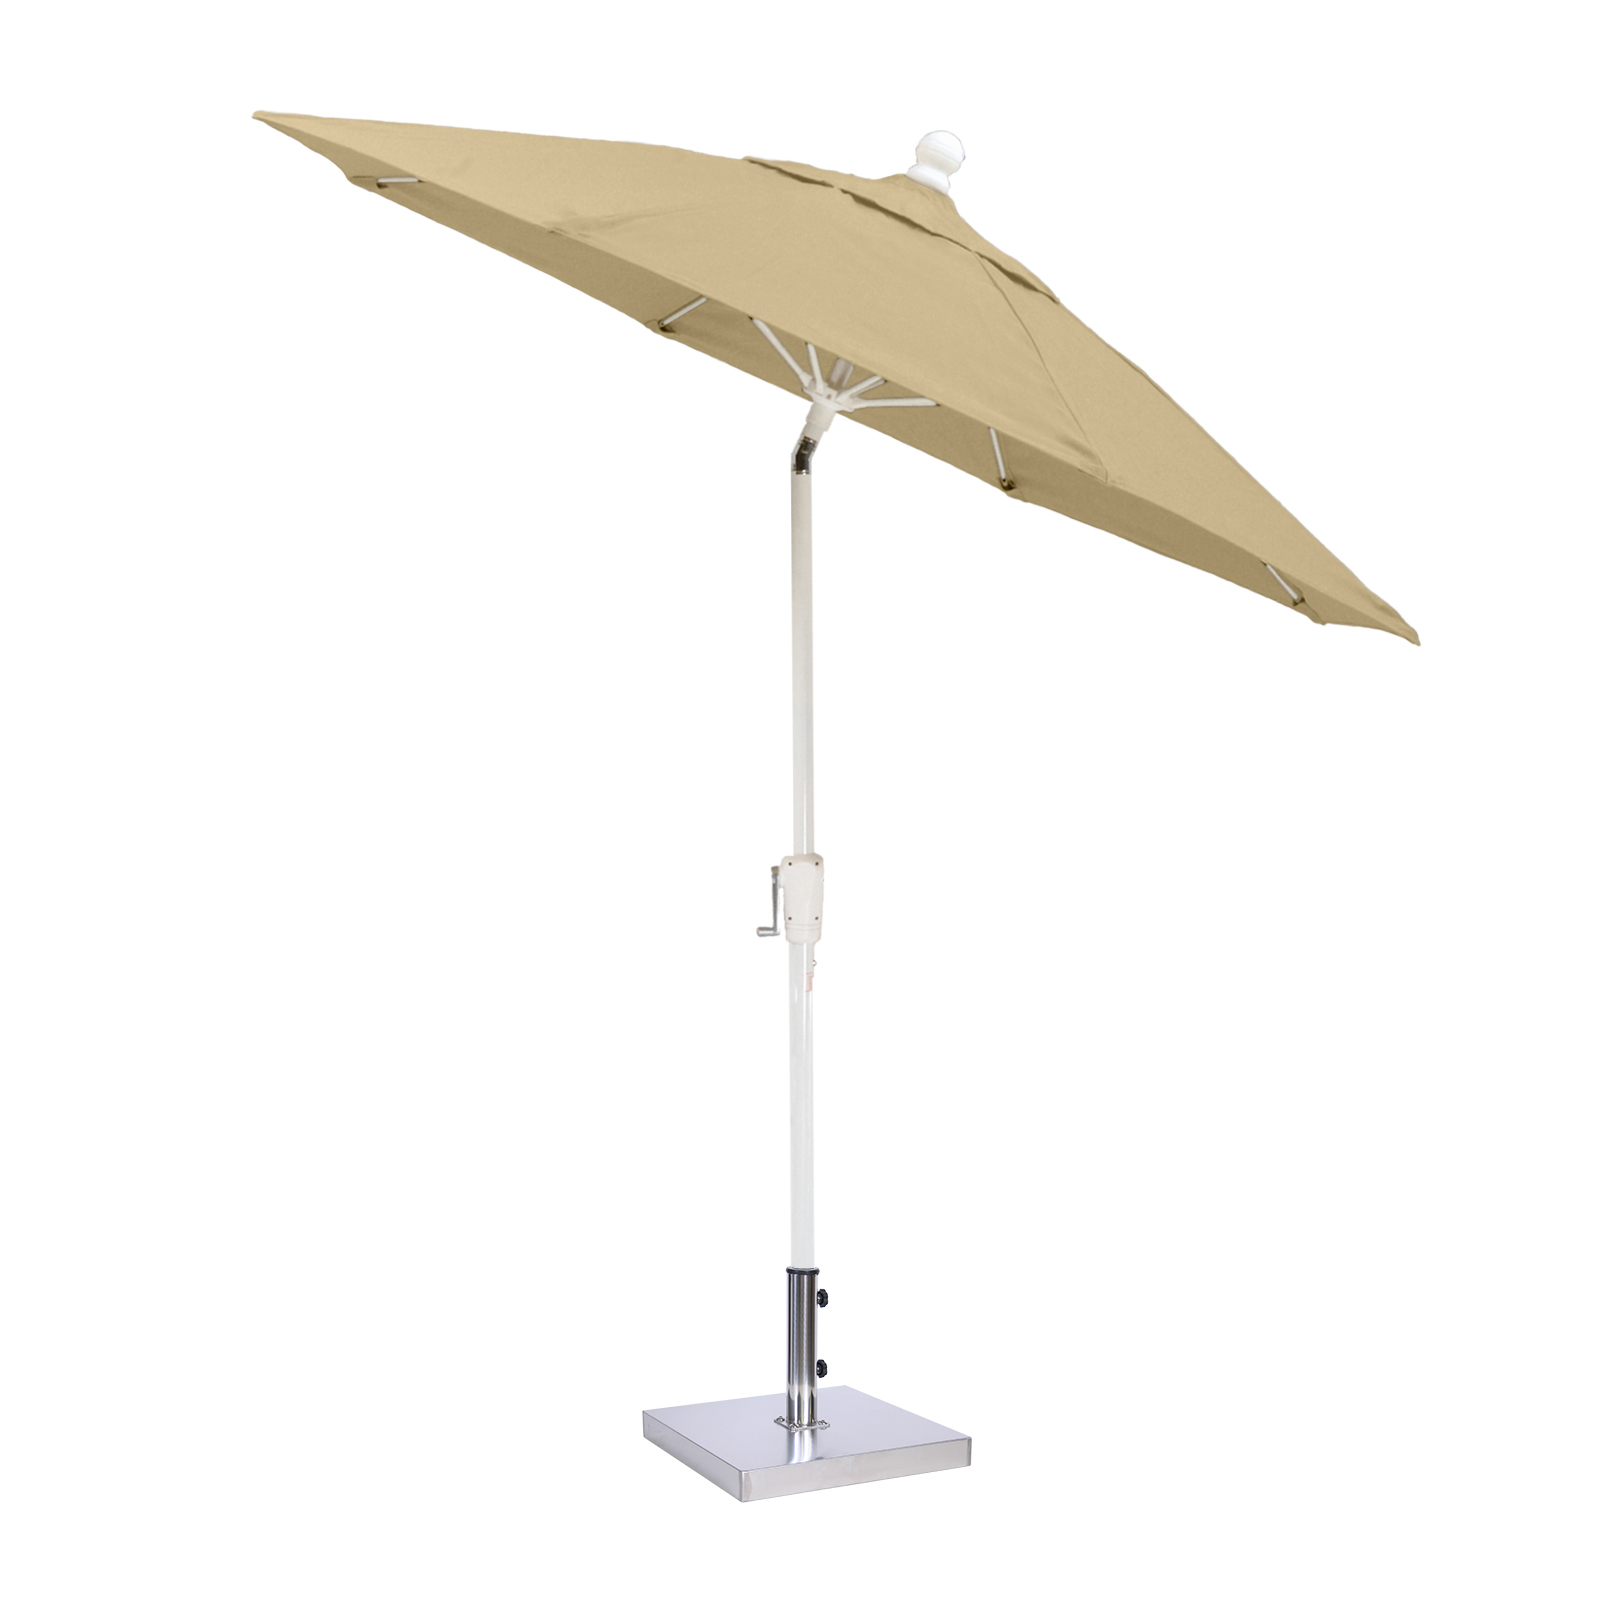 MiYu Furniture  7.5 ft Fiberglass Market Umbrella with Auto Tilt - White Frame